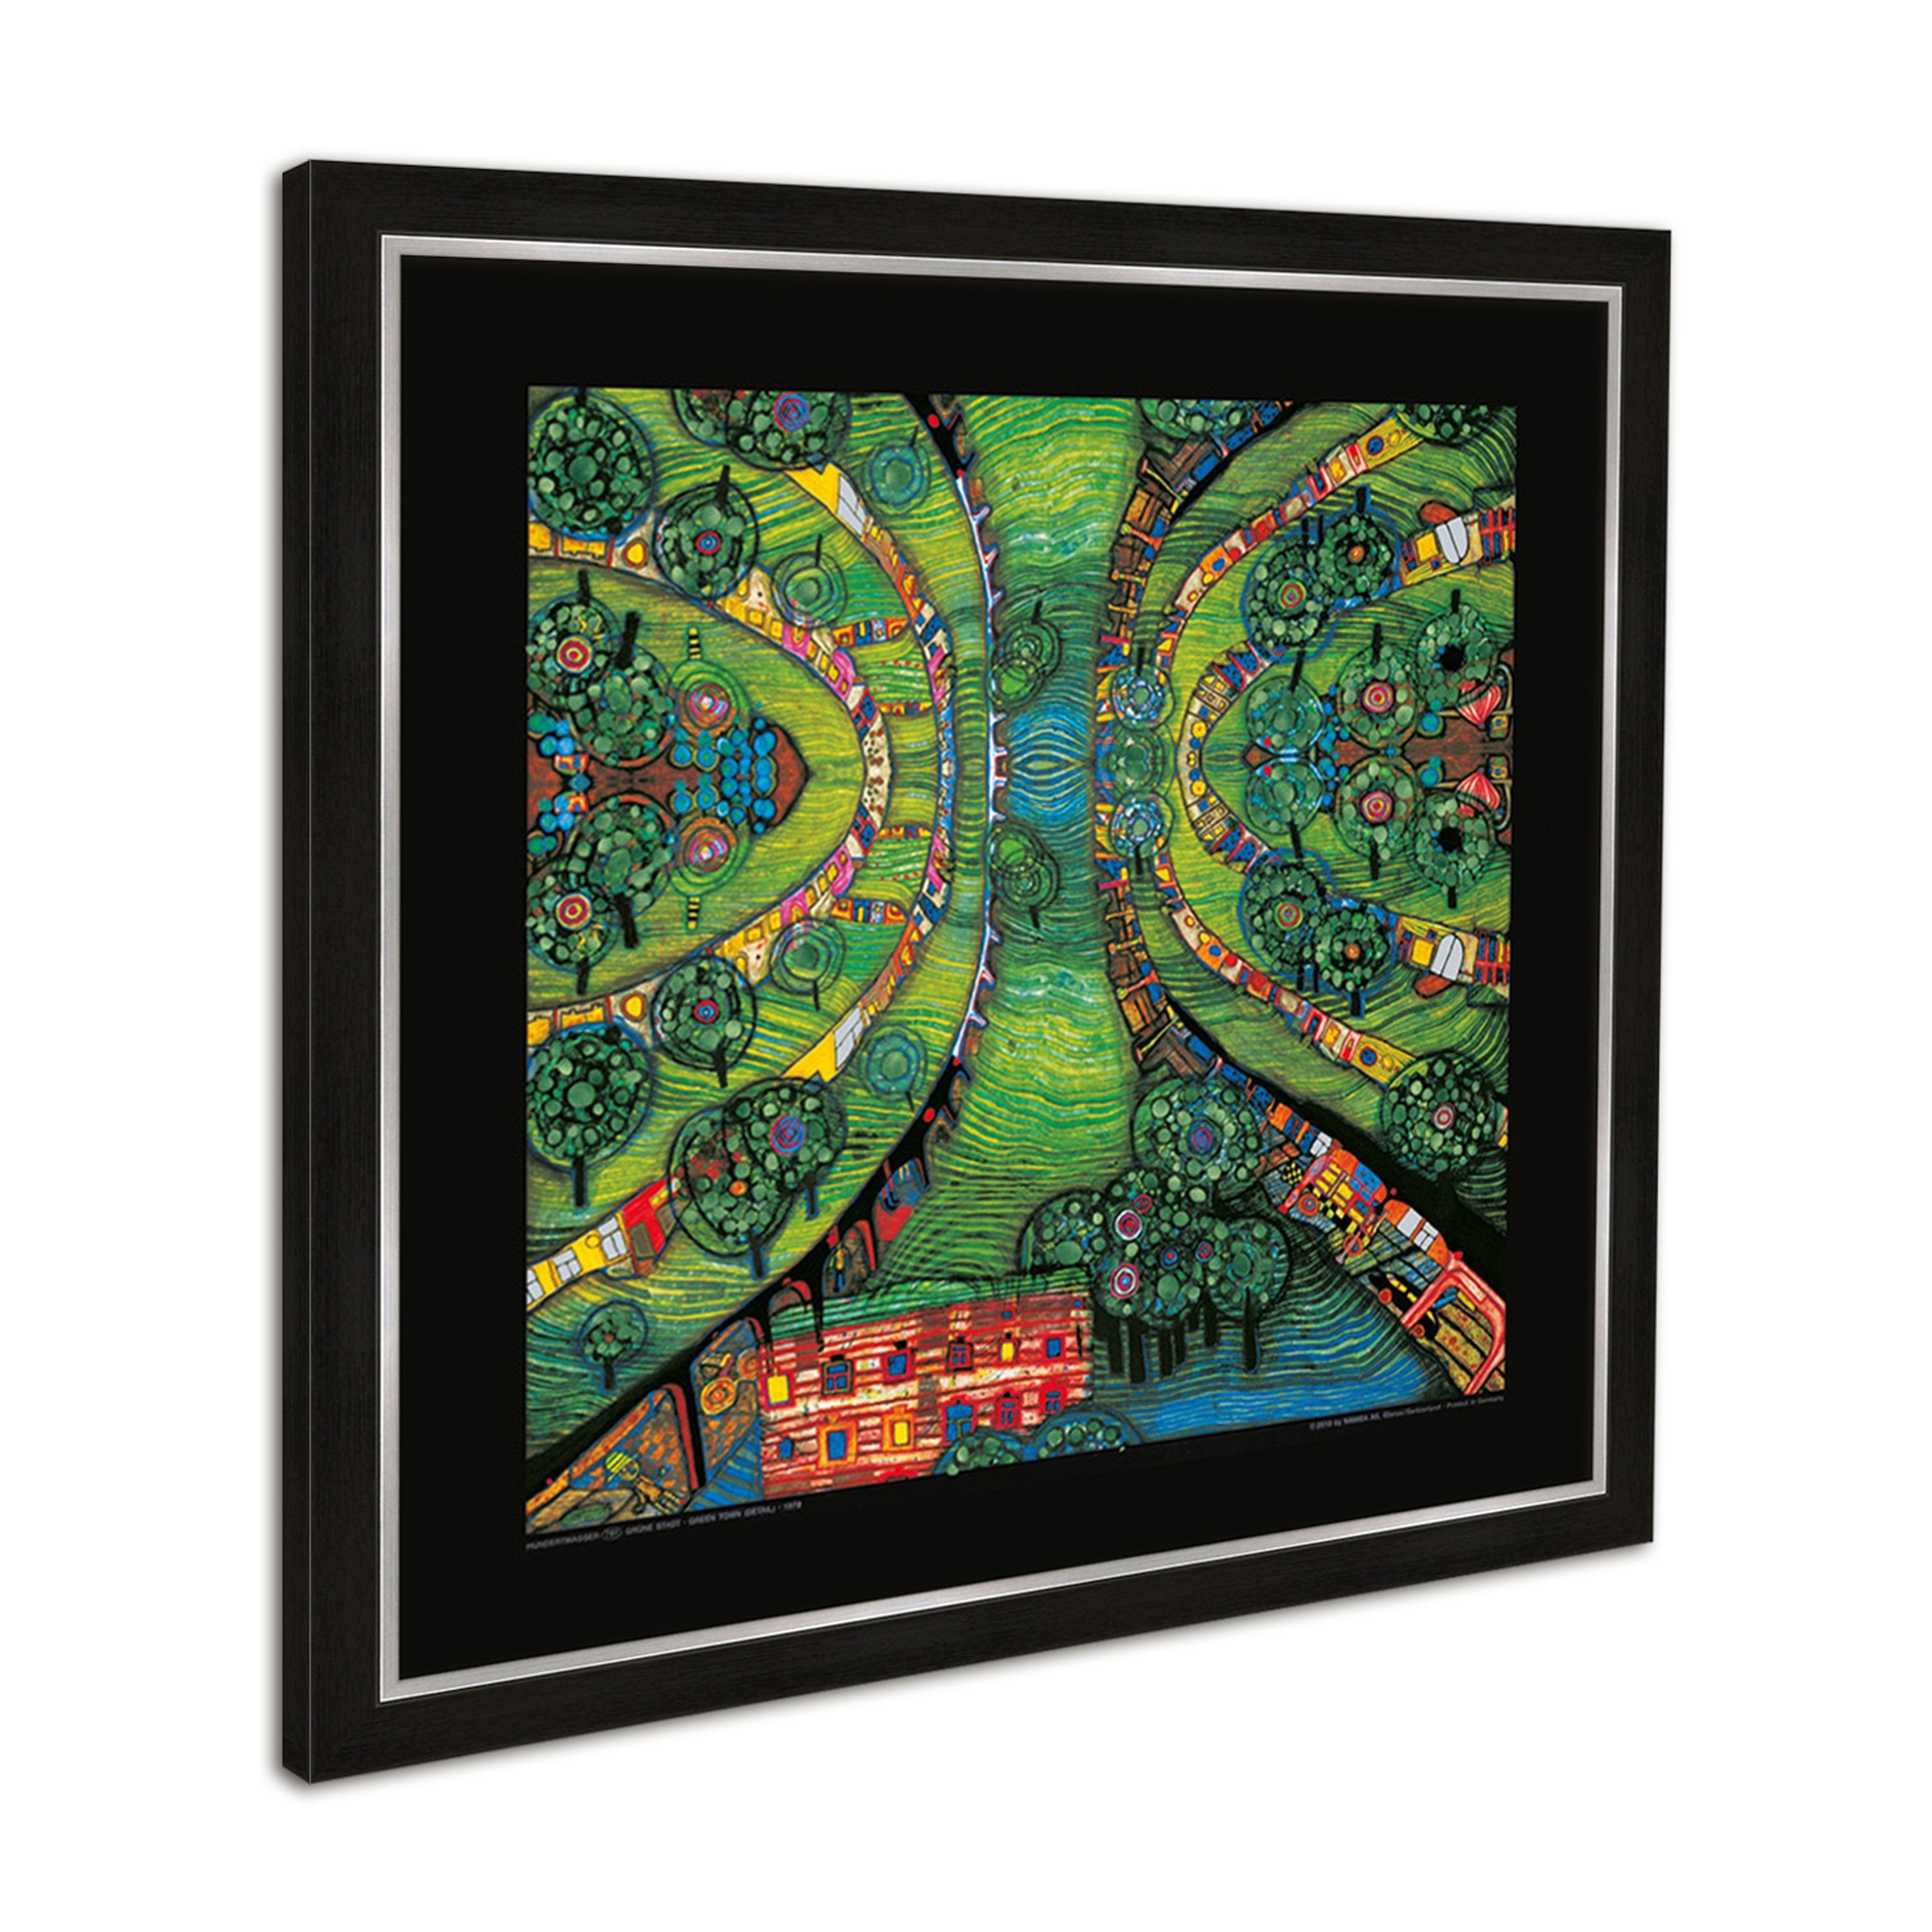 mit Poster Wandbild Rahmen gerahmt Hundertwasser / 53x53cm Bild Rahmen / artissimo mit Bild